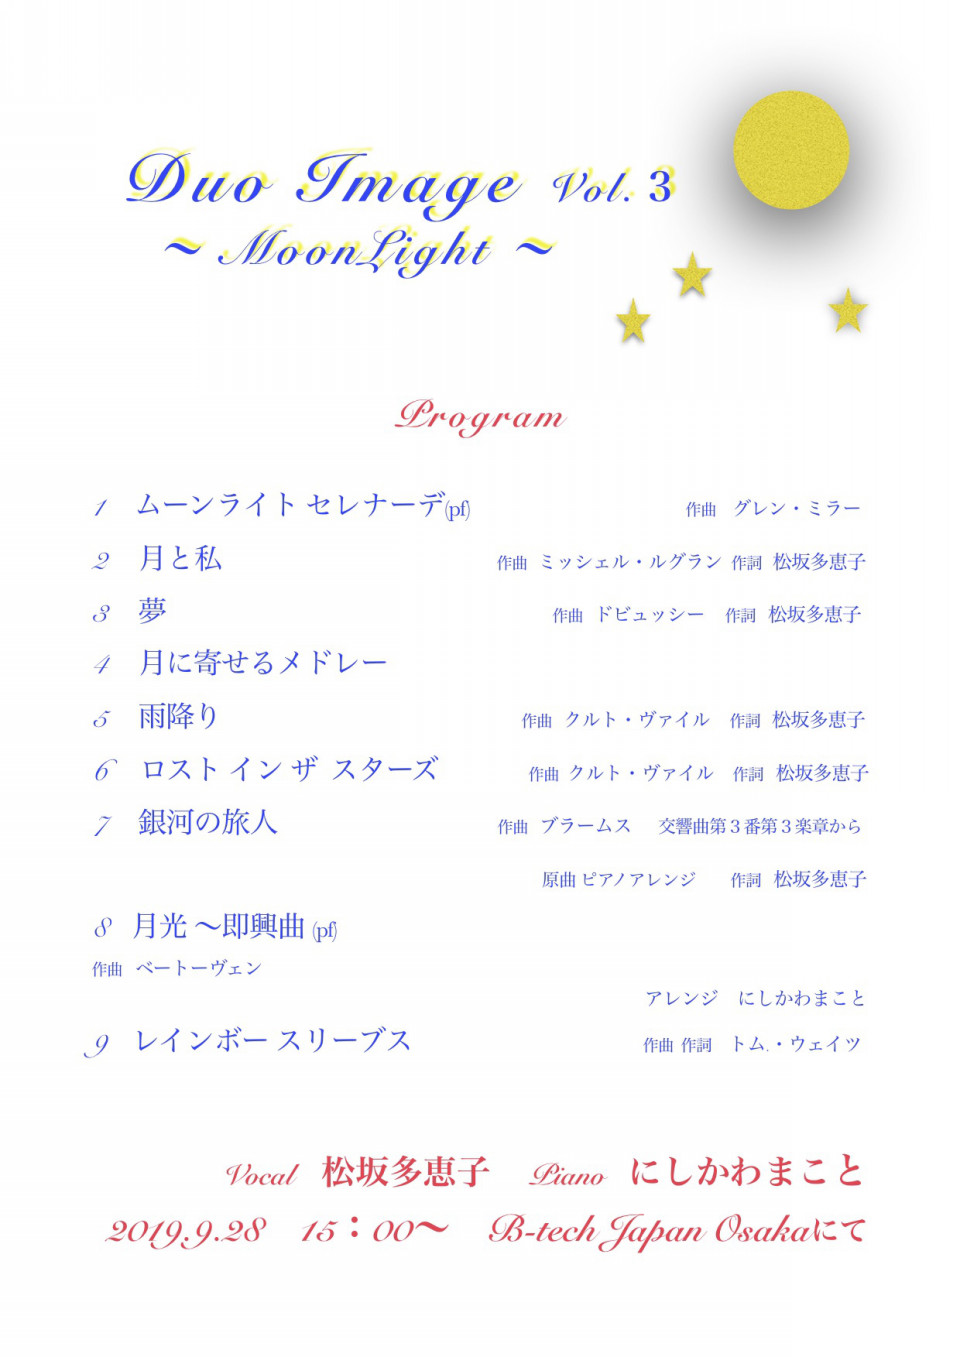 Duo Image Vol 3 Moonlight スペシャル 松坂多恵子 Homepage